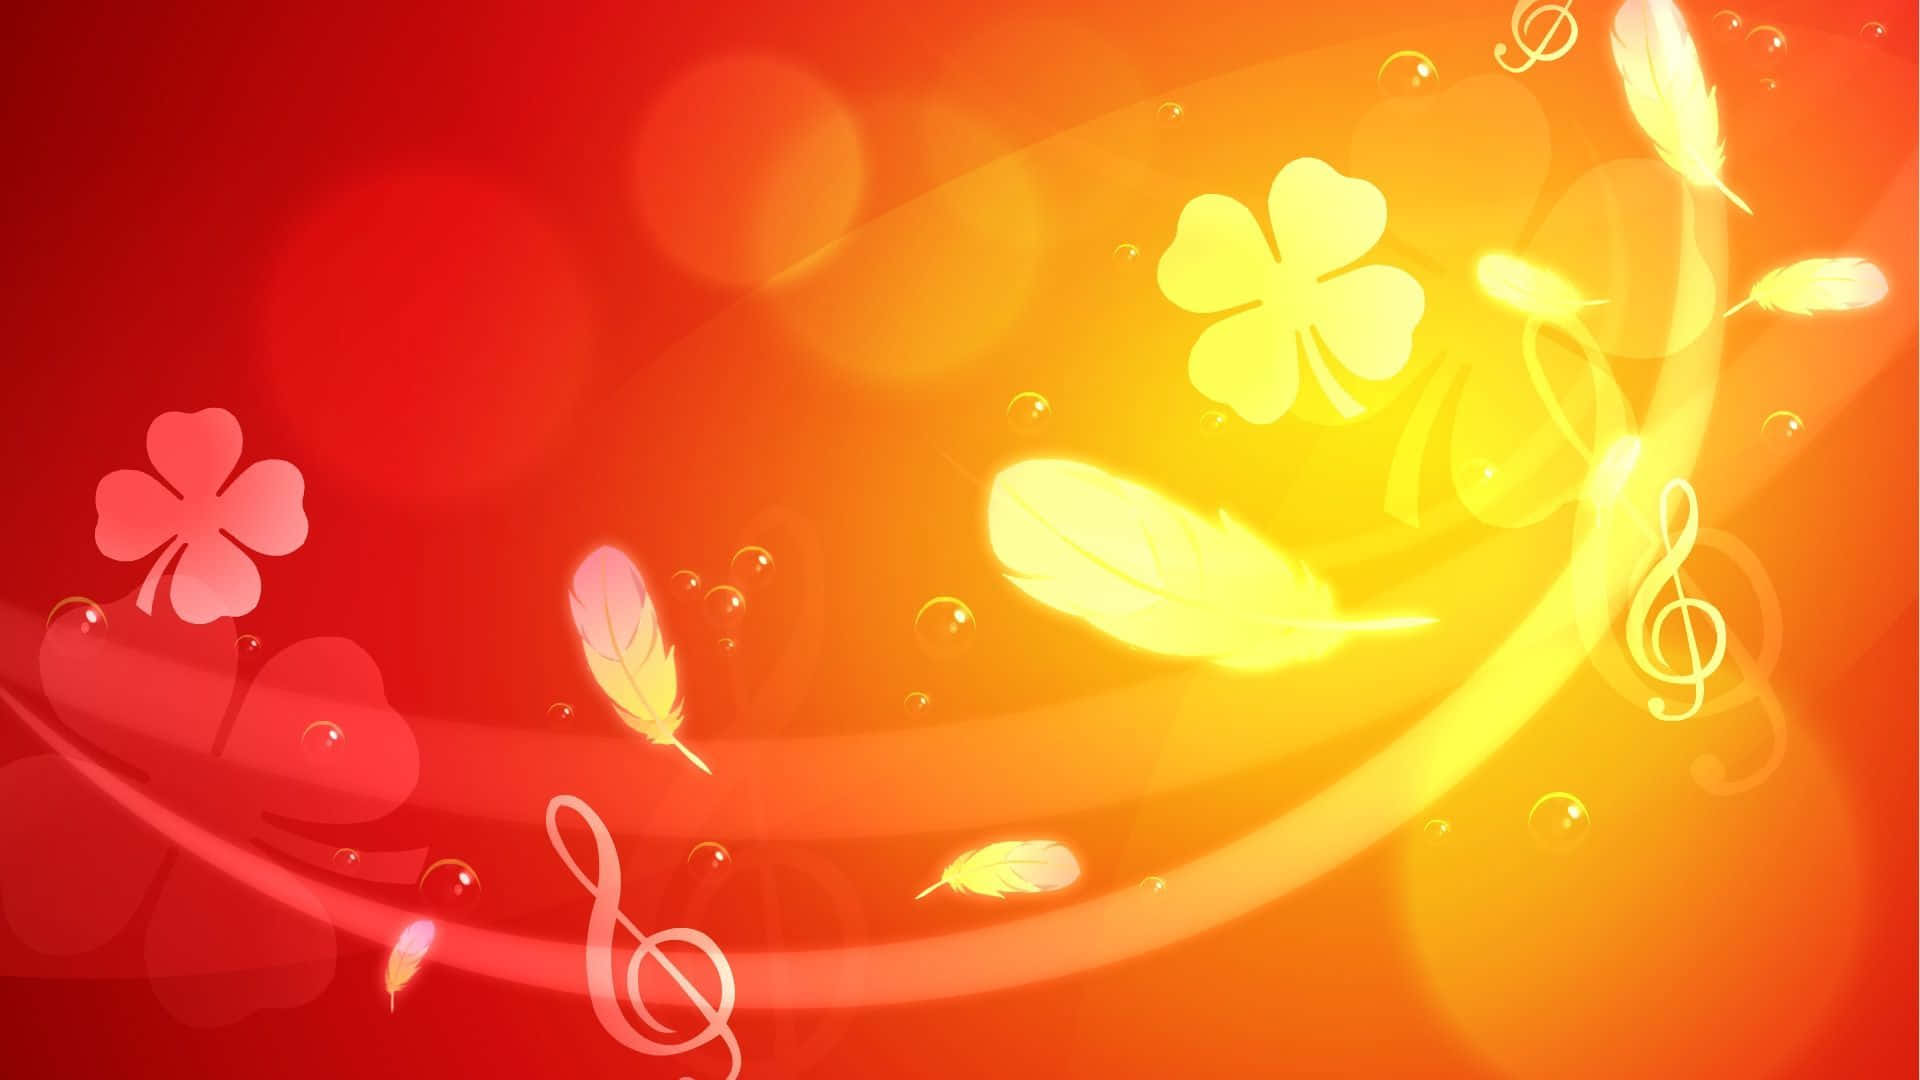 Musical Symbols Flowers And Feathers Orange Background